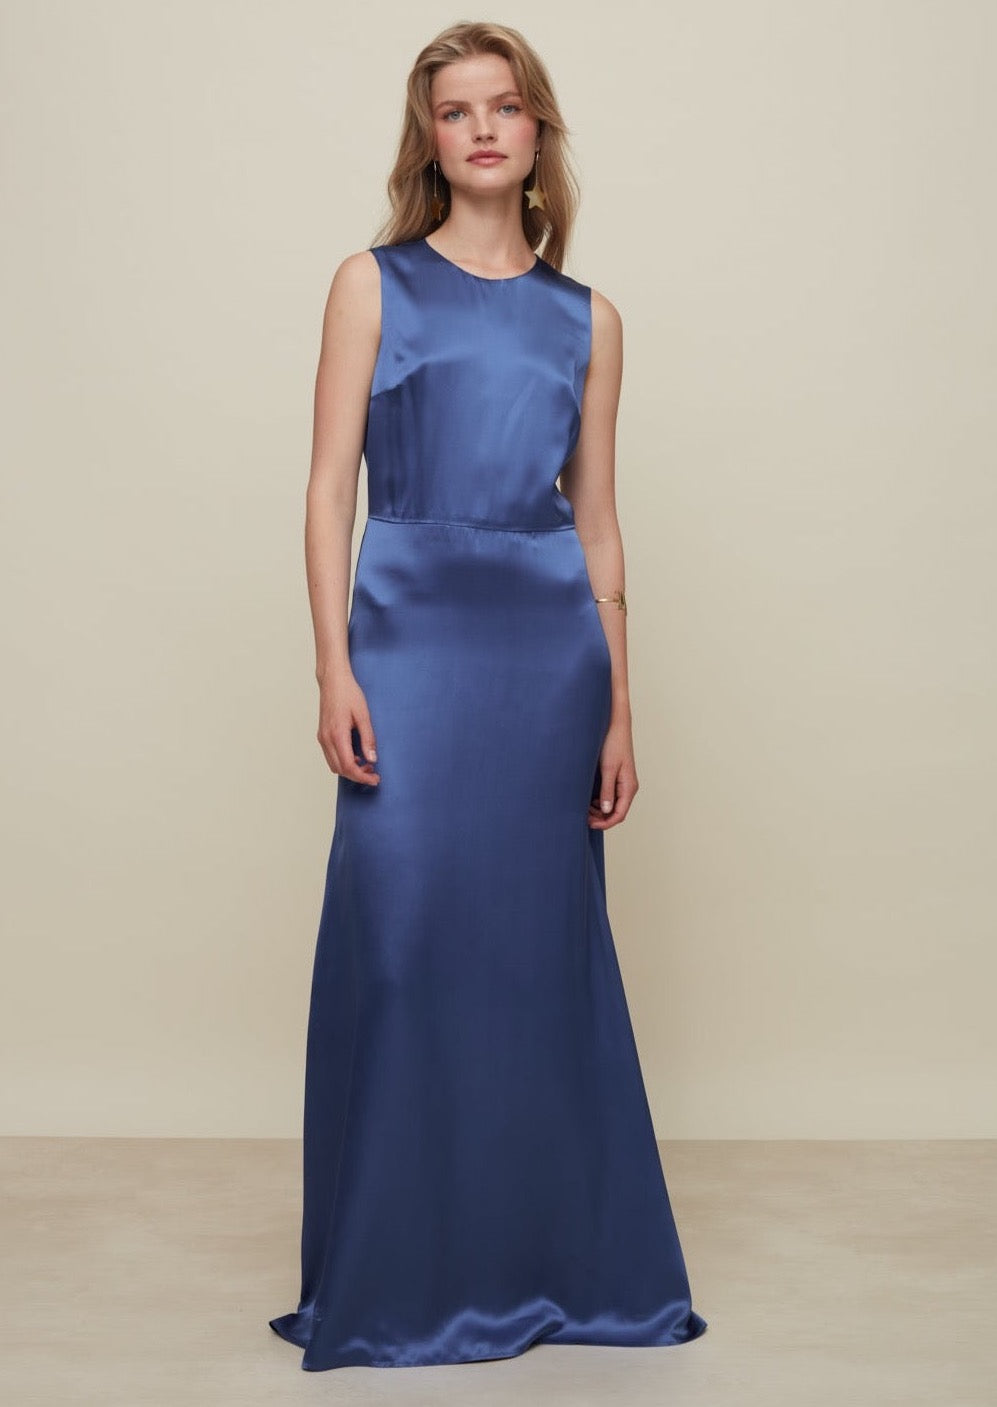 Galeria-Iris Blue Silk Dress-Justbrazil